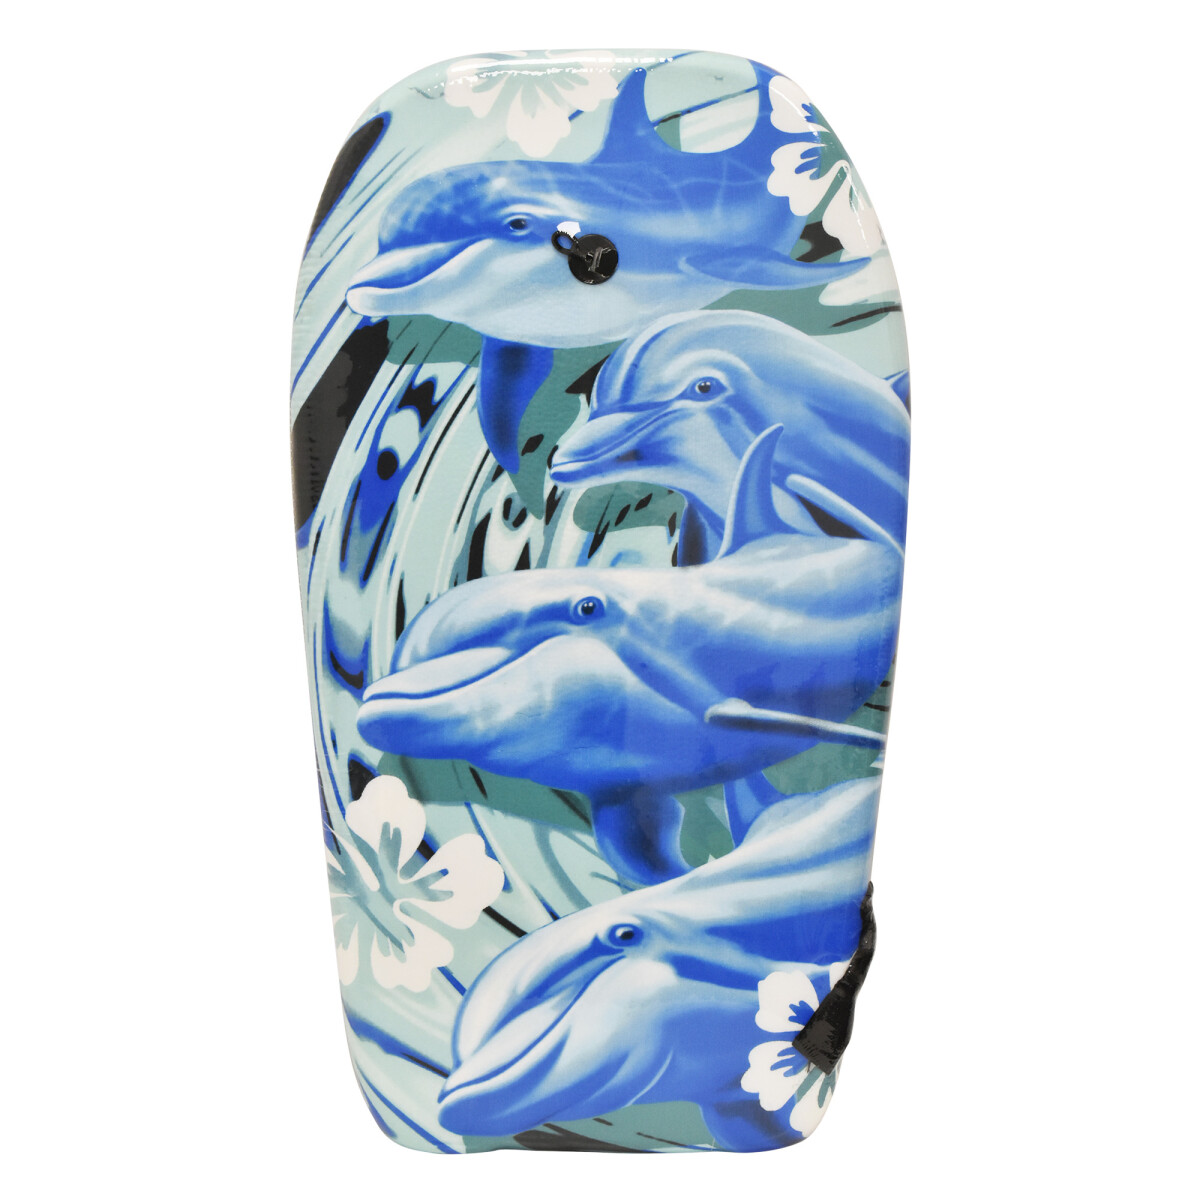 Tabla Morey Bodyboard Barrenadora Olas Surf Flotador 82Cm - Azul Verdoso 